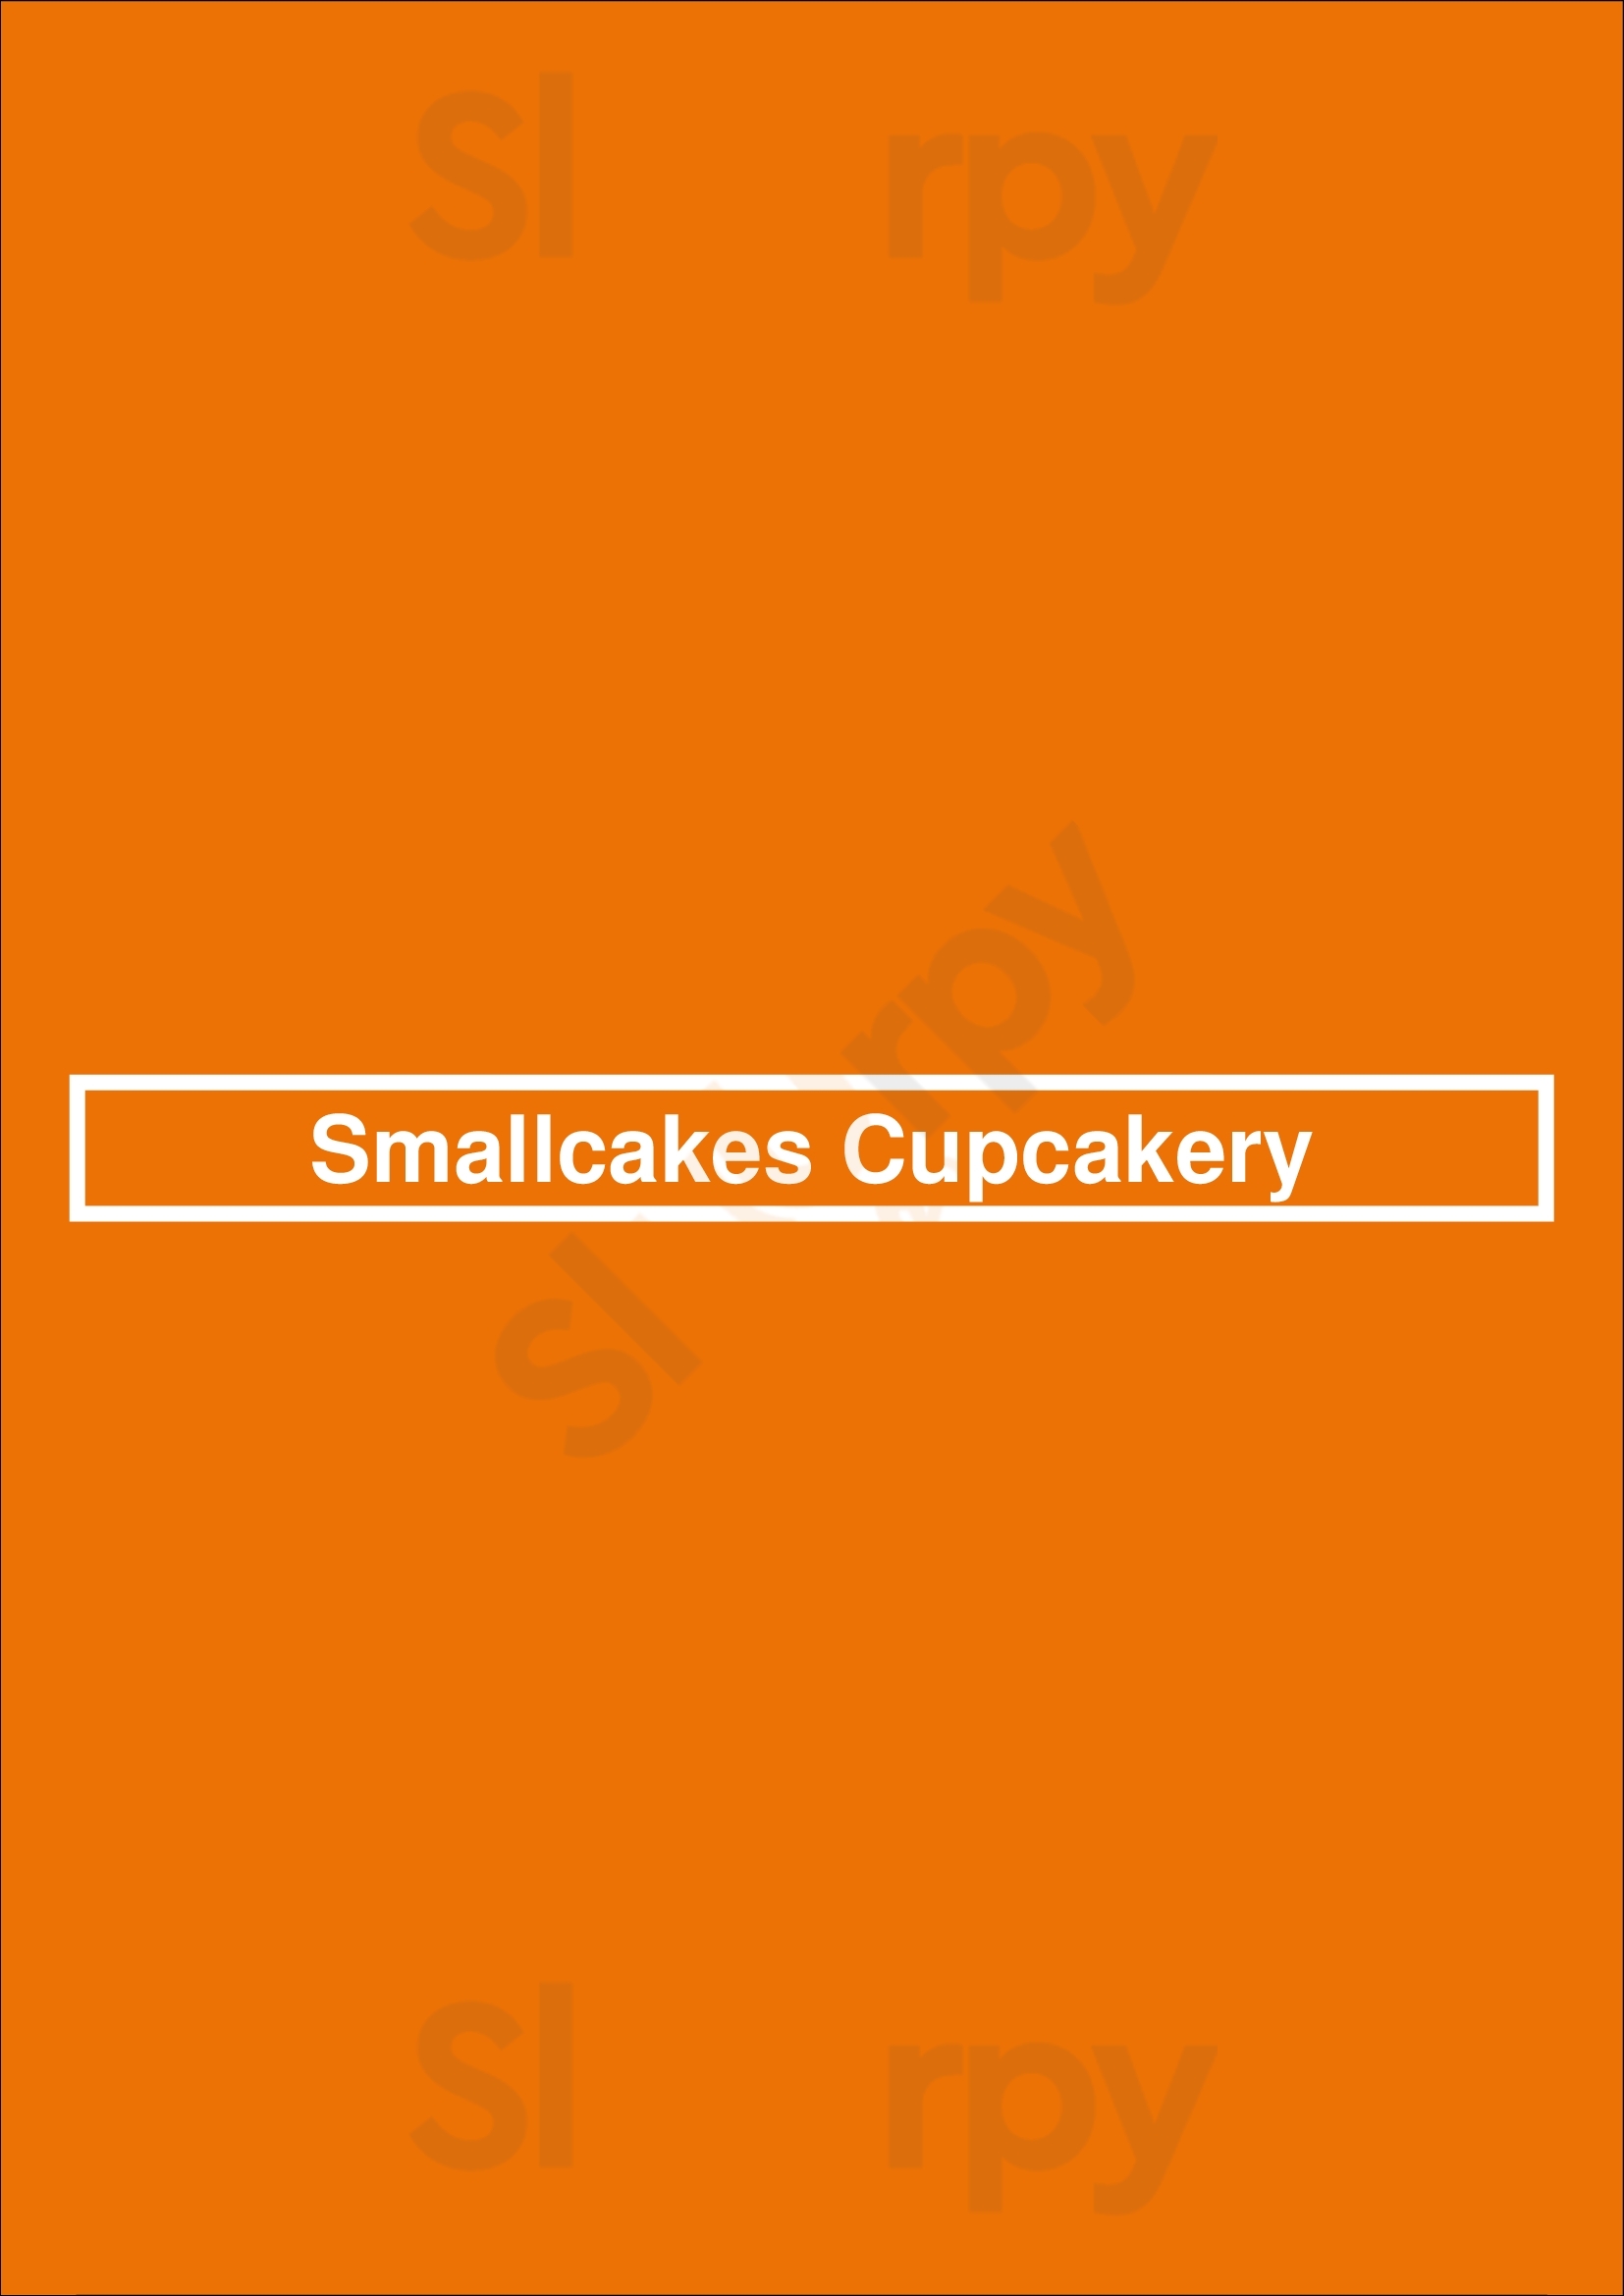 Smallcakes Cupcakery Albany Menu - 1